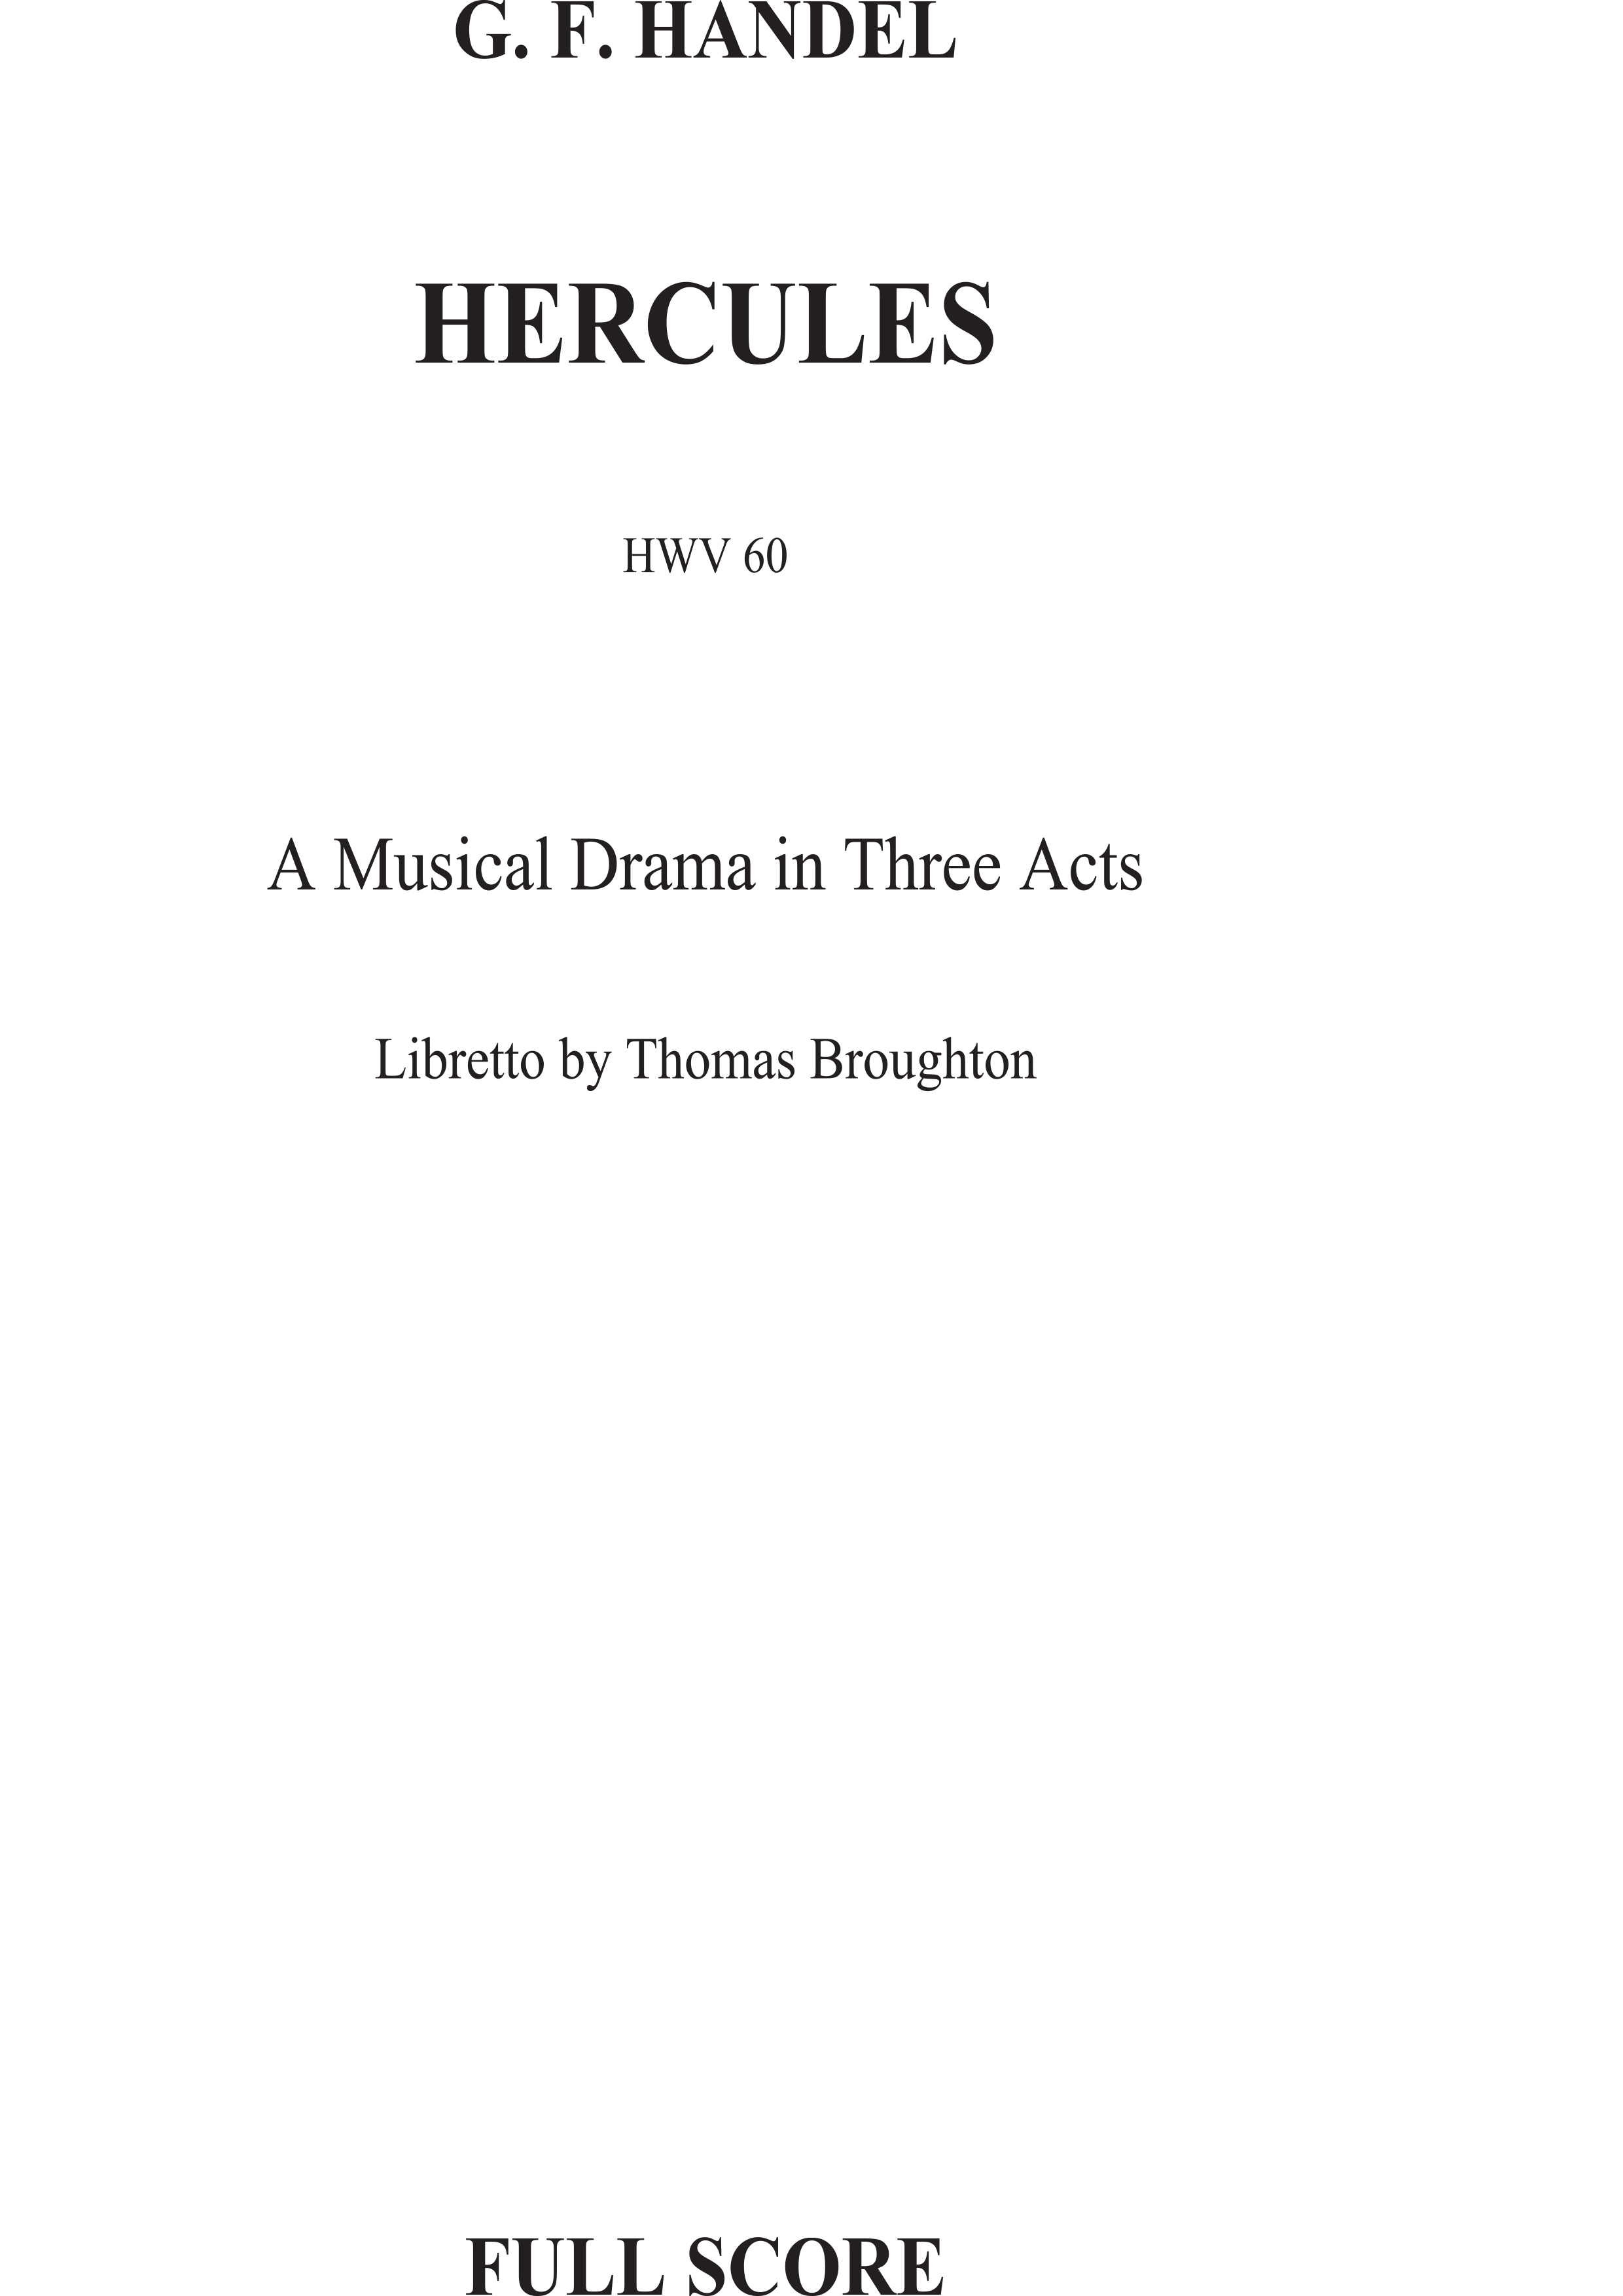 Georg Friedrich Hndel: Hercules (Ed. Peter Jones) (Full Score): Opera: Score